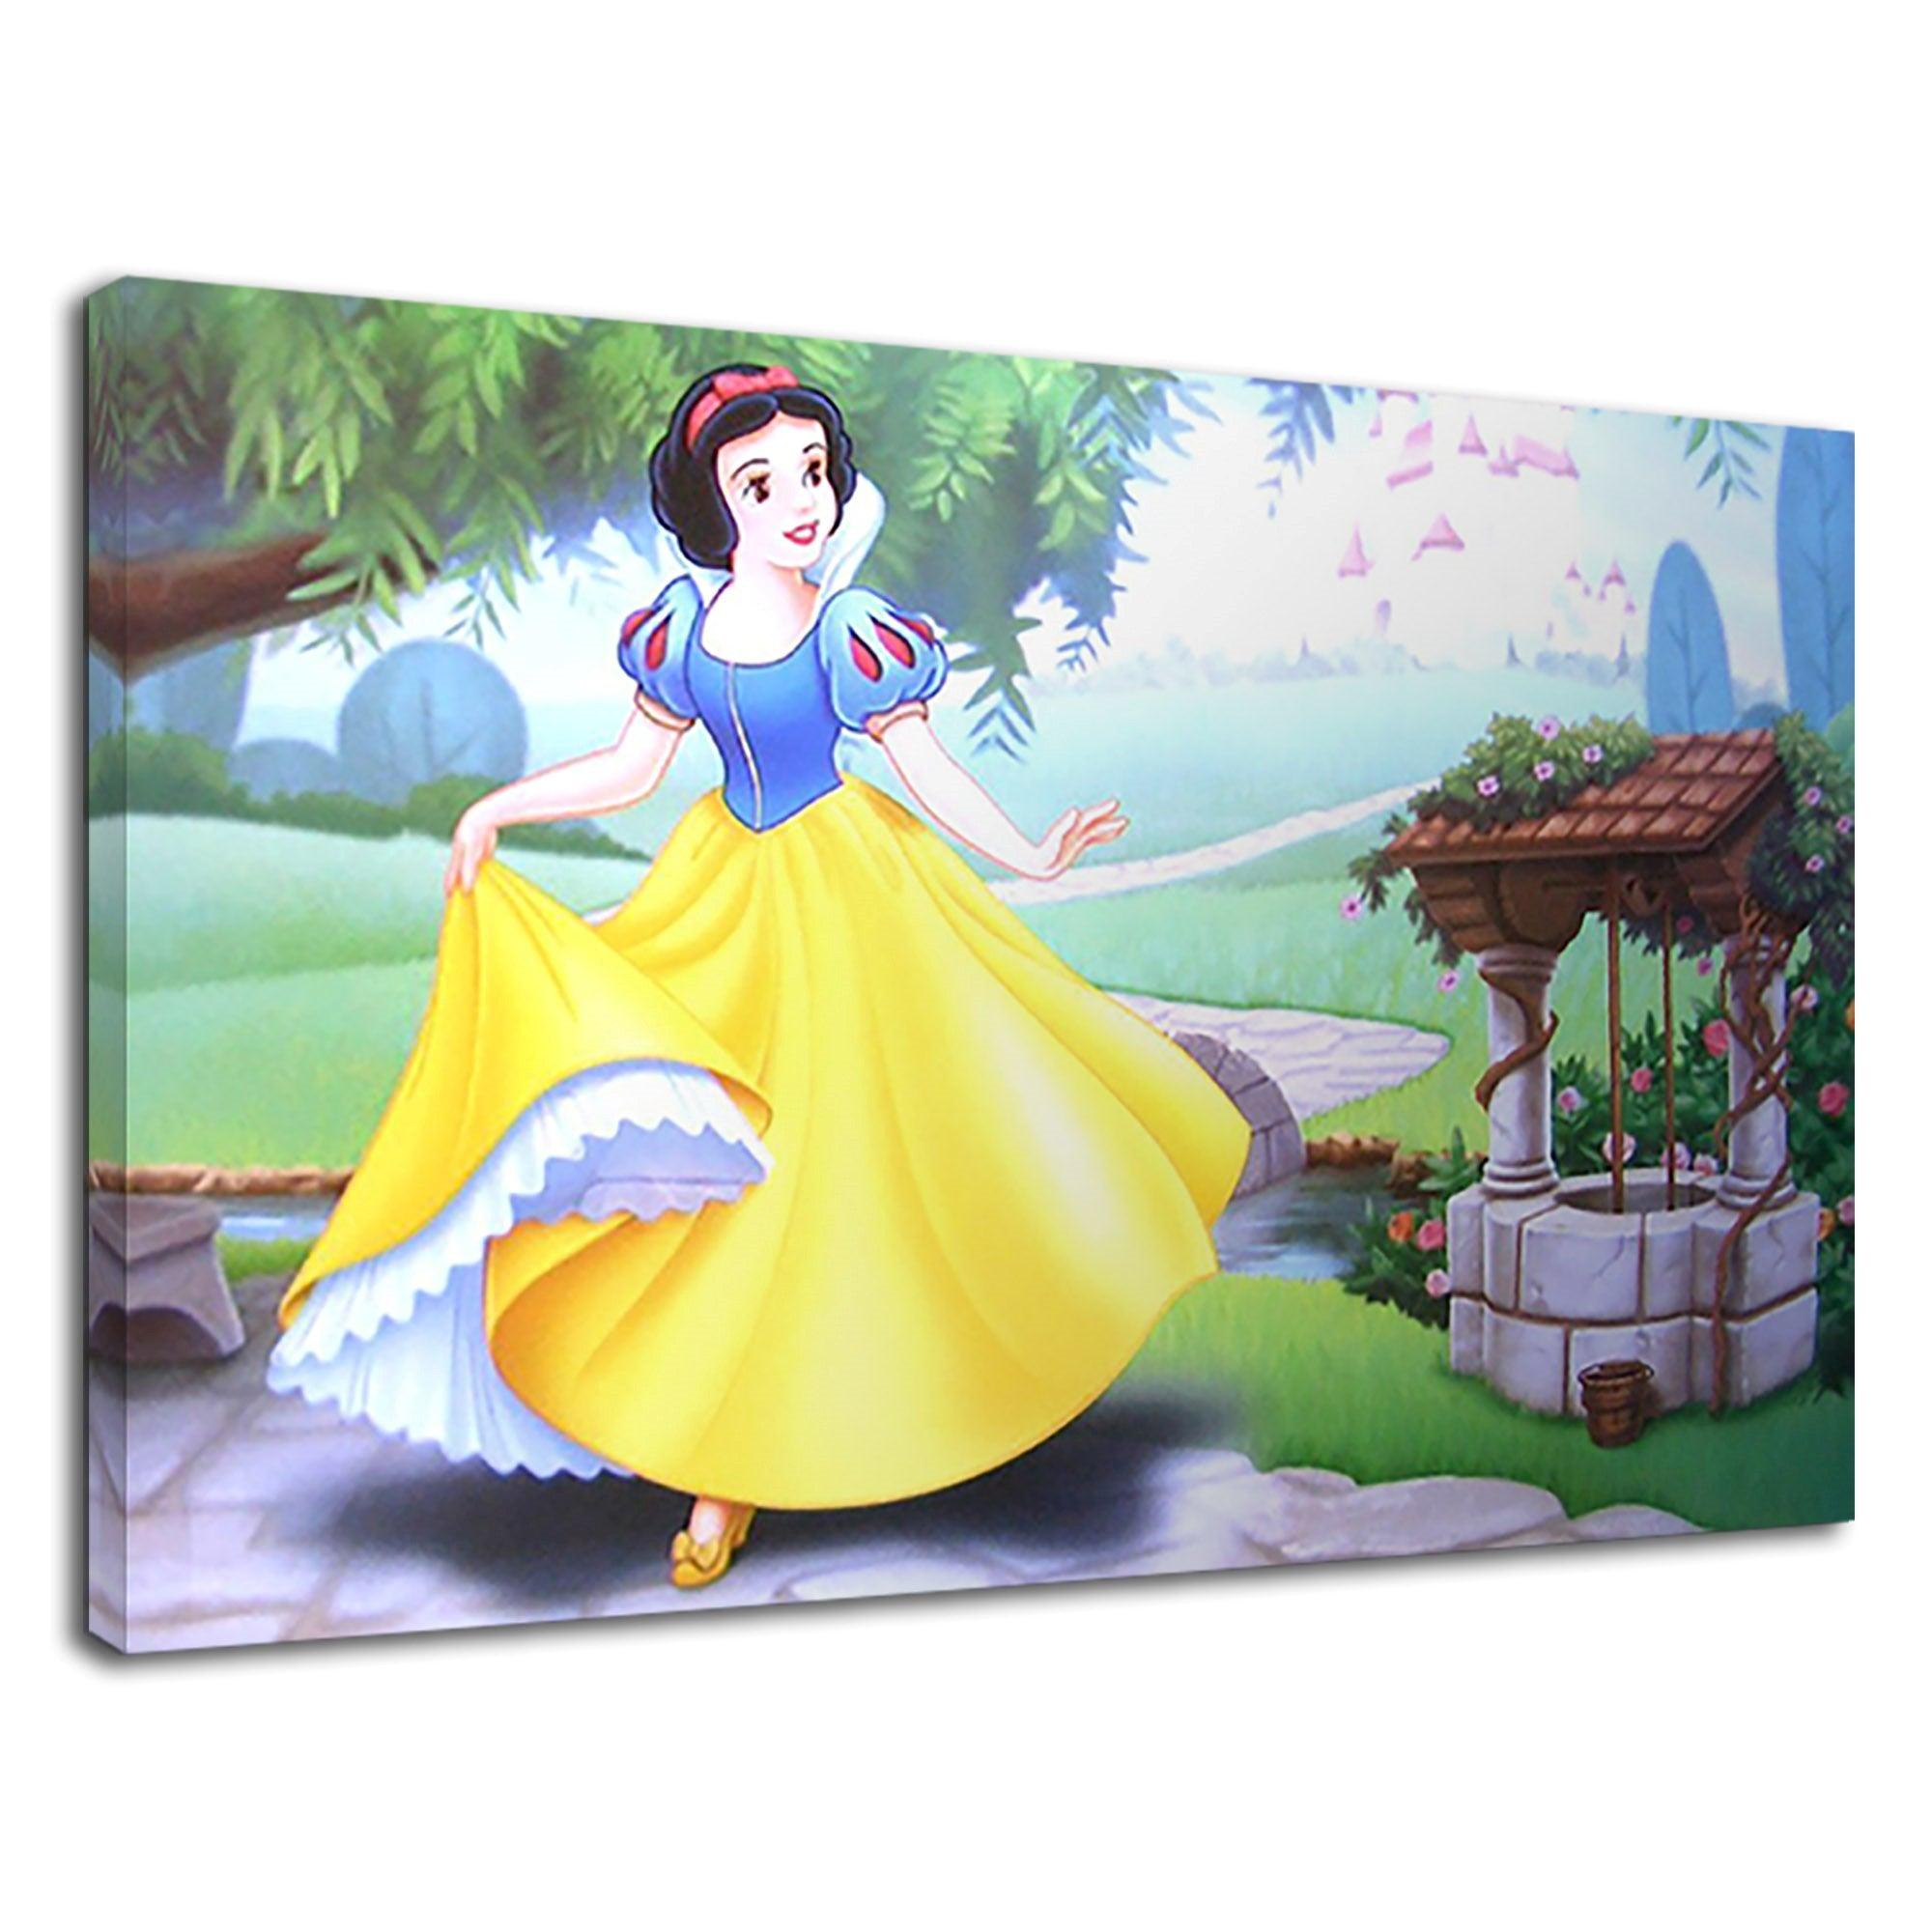 Princess Snow White Wallpapers - Top Free Princess Snow White ...